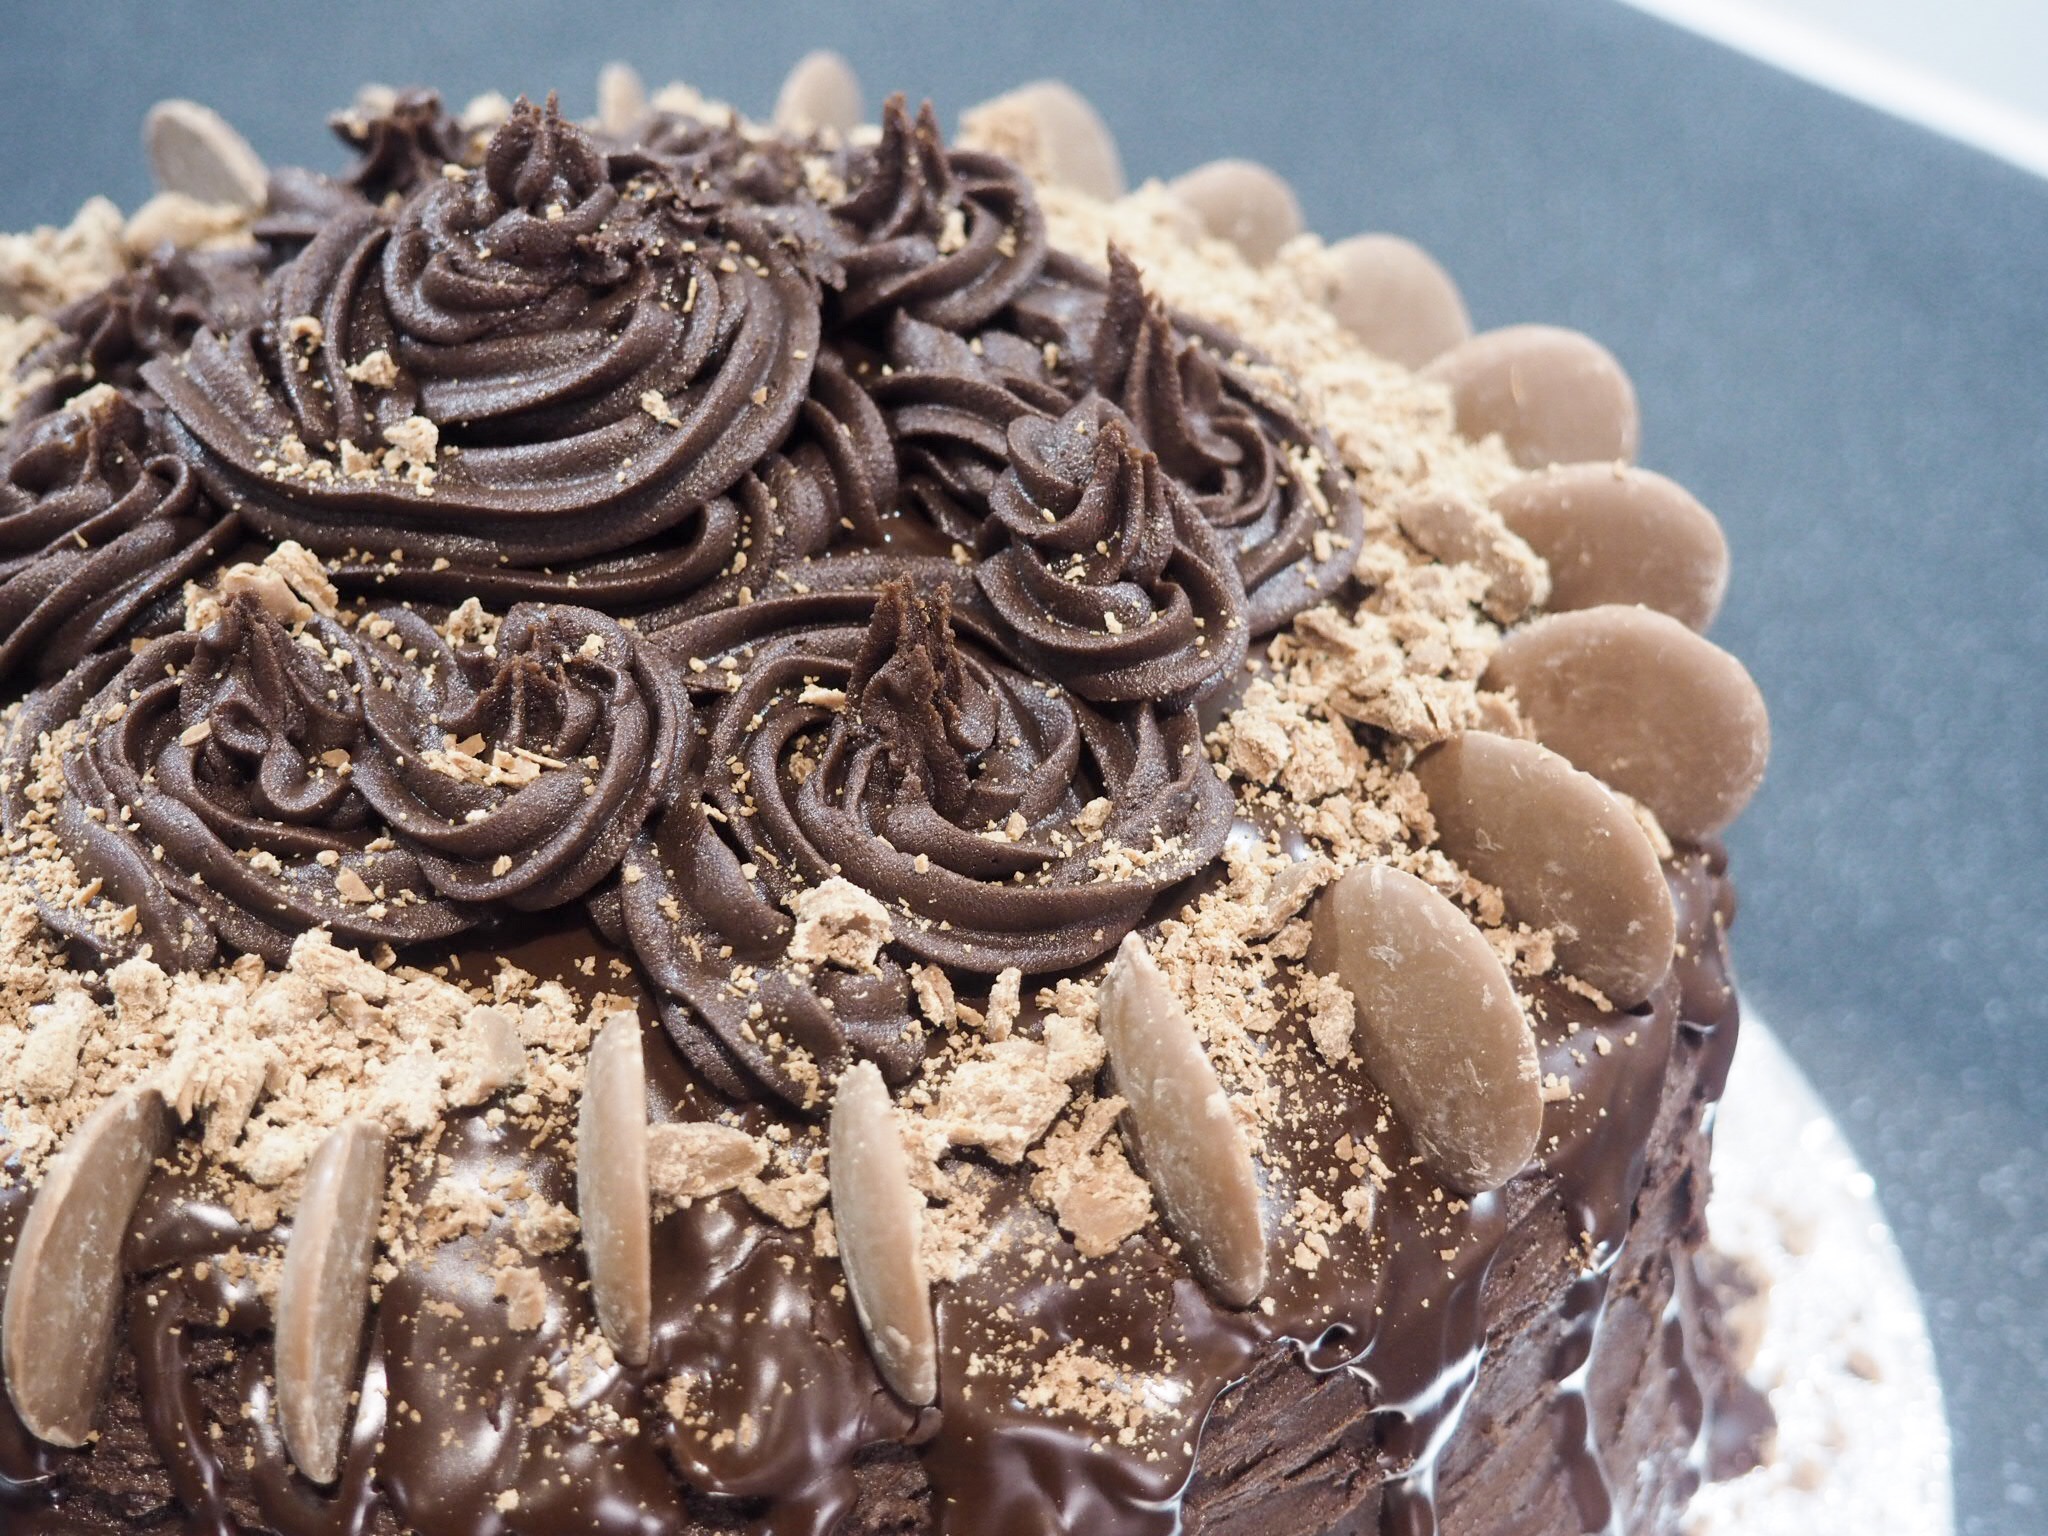 Chocolate ganache on a chocolate cake